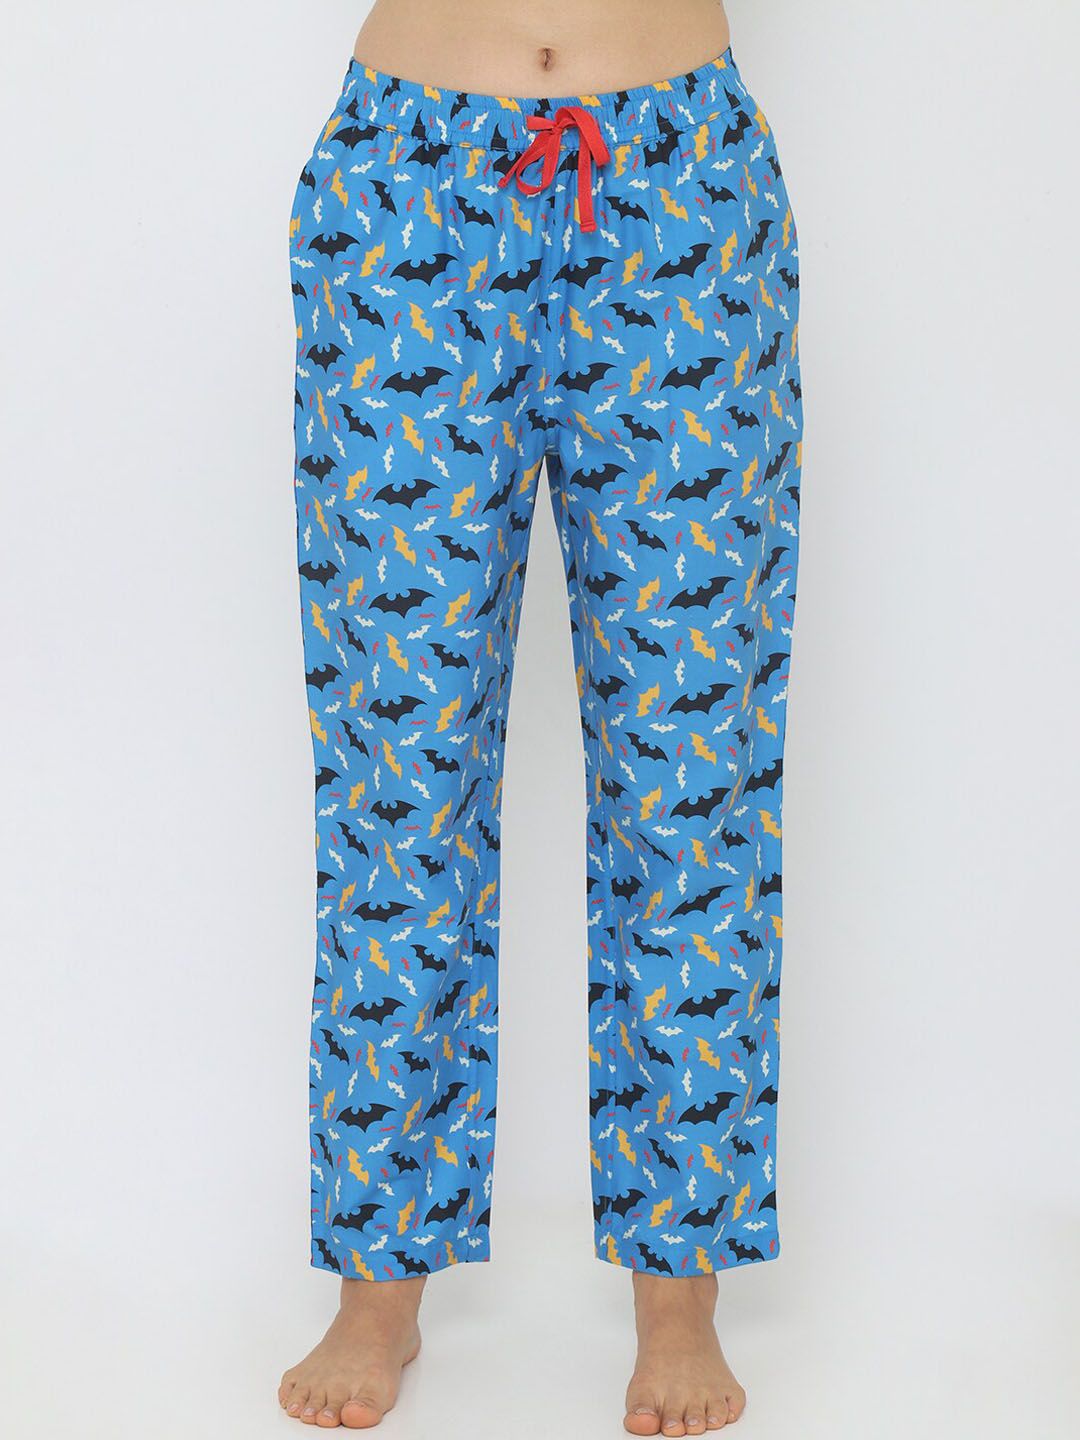 Smugglerz Women Blue Batman Printed Pyjamas Price in India